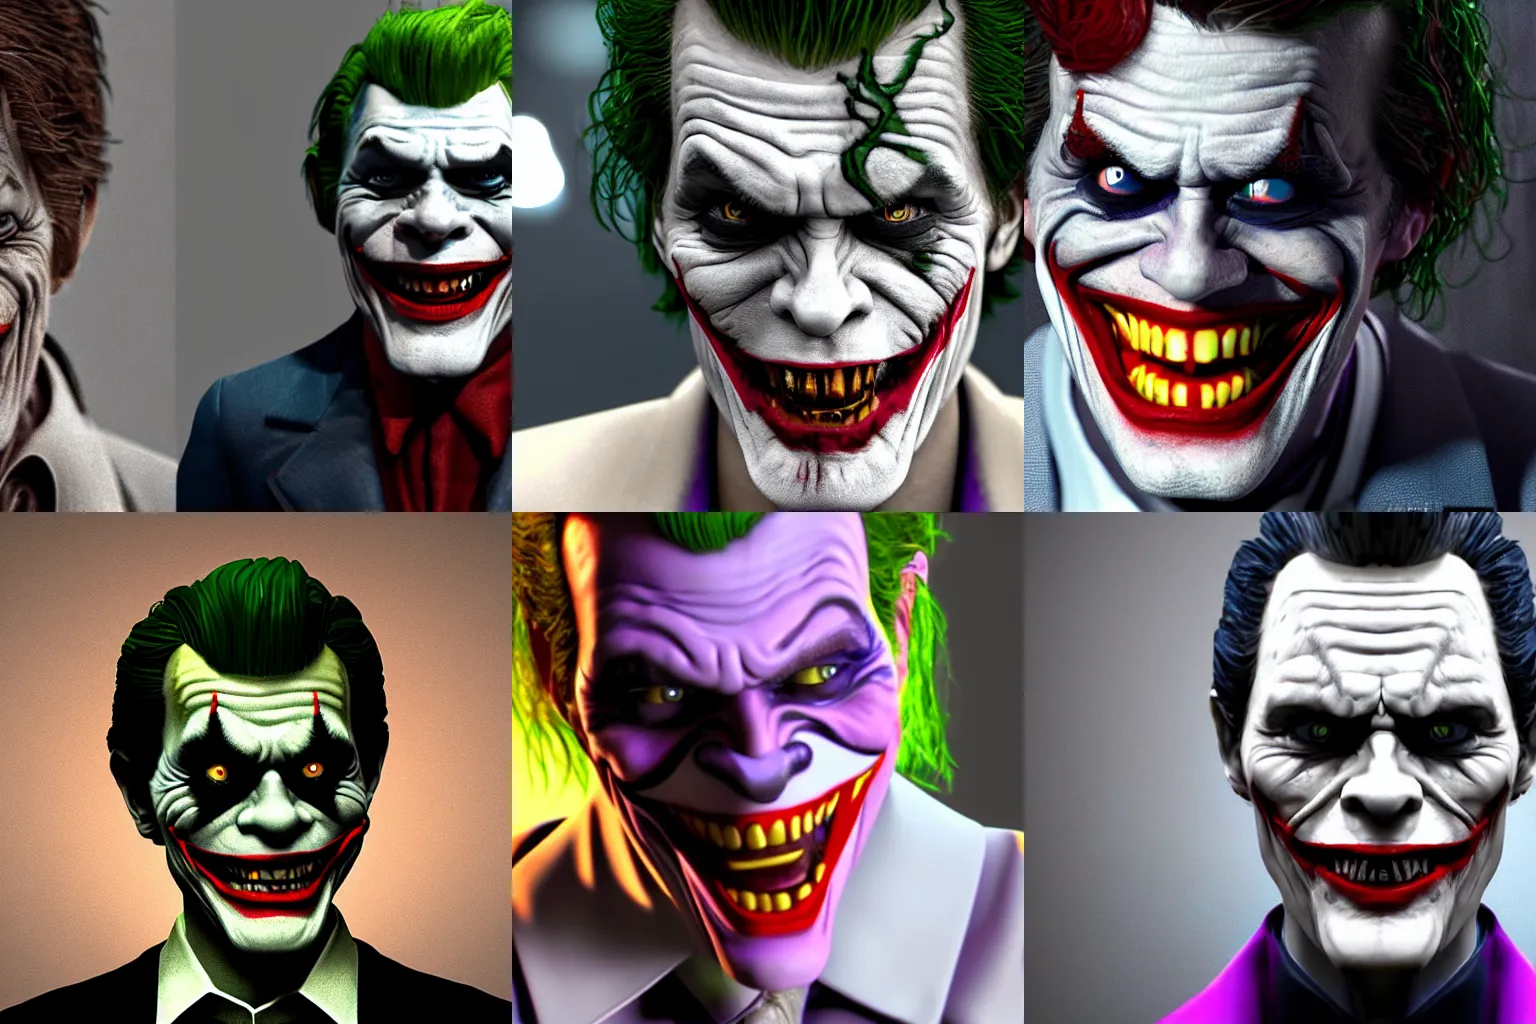 Prompt: Willem DaFoe as The Joker, detailed, 4K, rendered in Unreal Engine